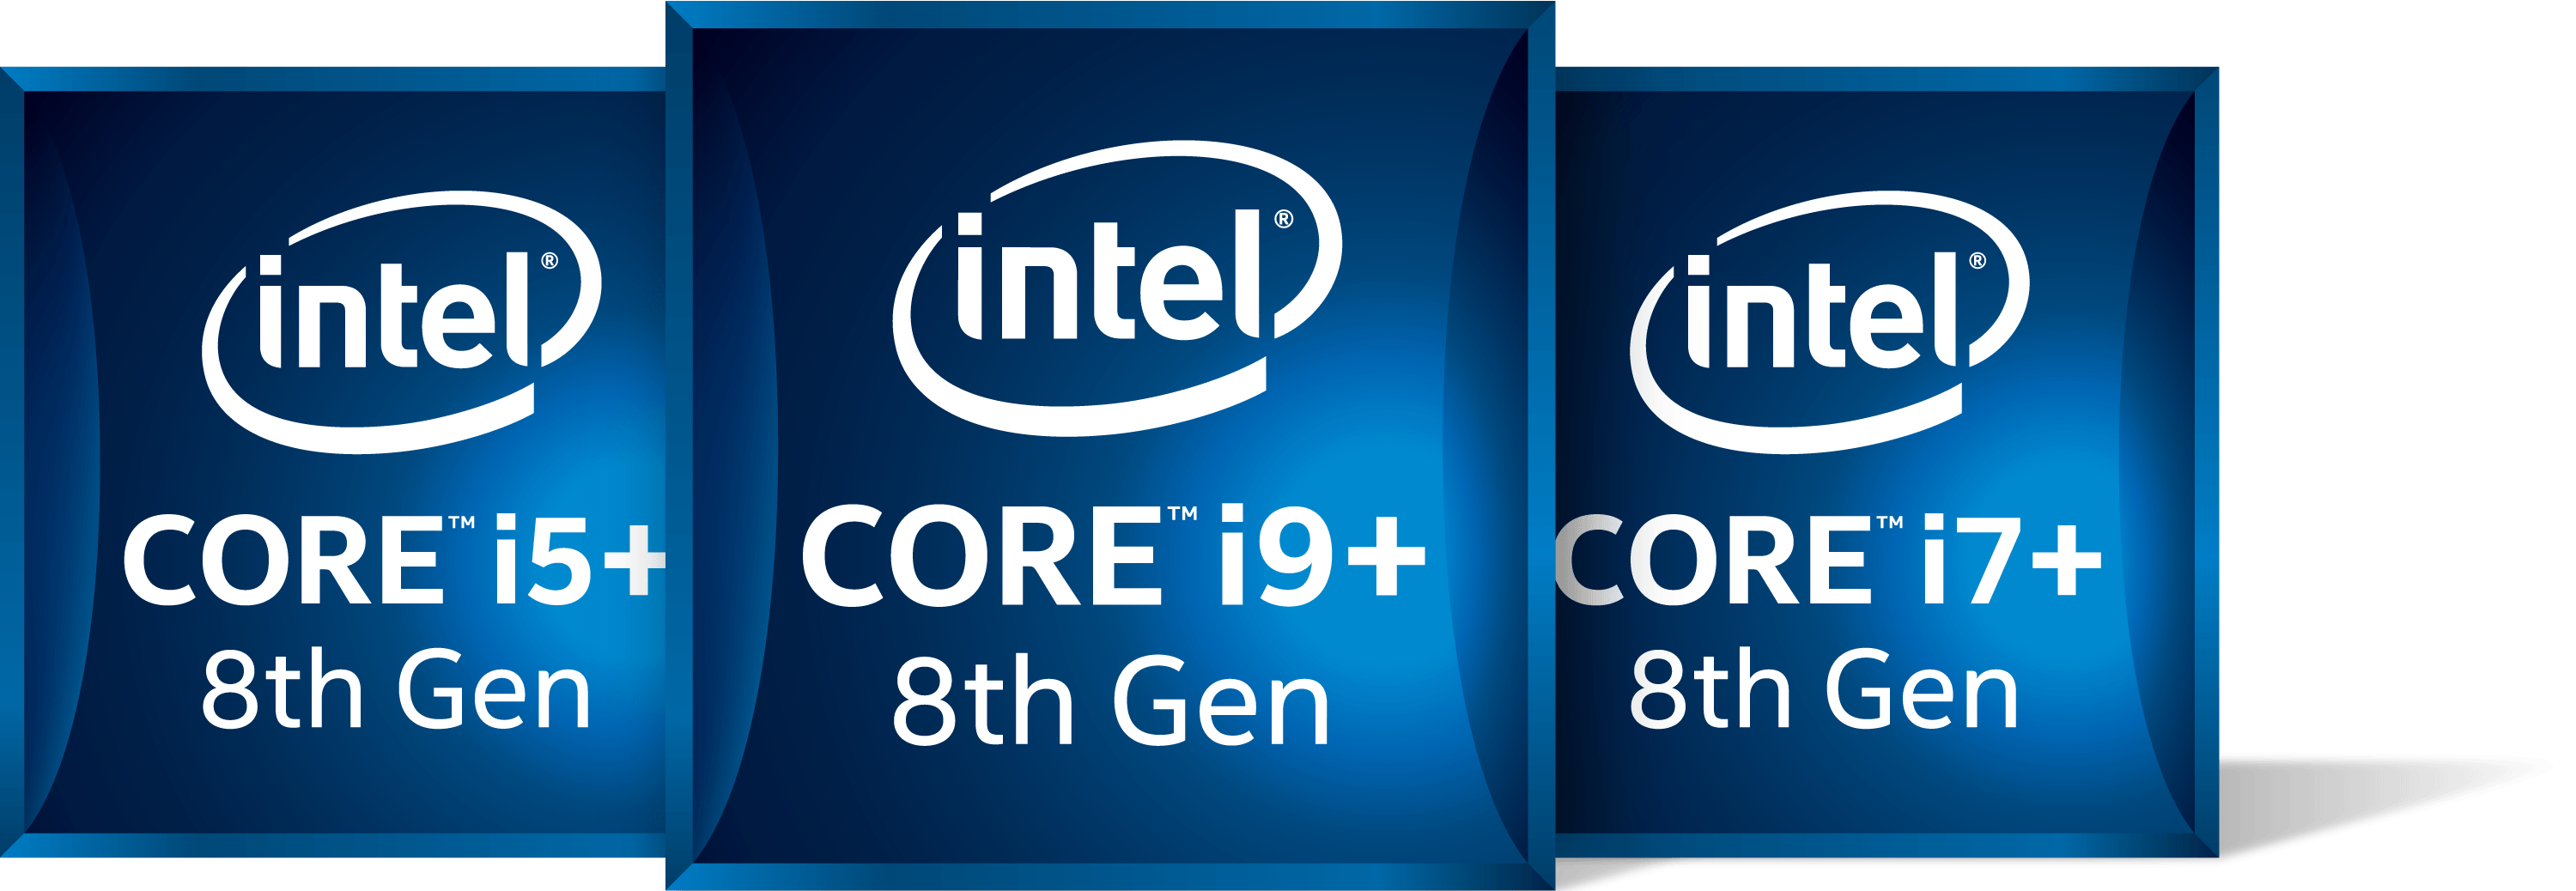 Intel Core I5 Logo - New Optane Branding: Core i9+, Core i7+, Core i5+ - Intel Expands ...